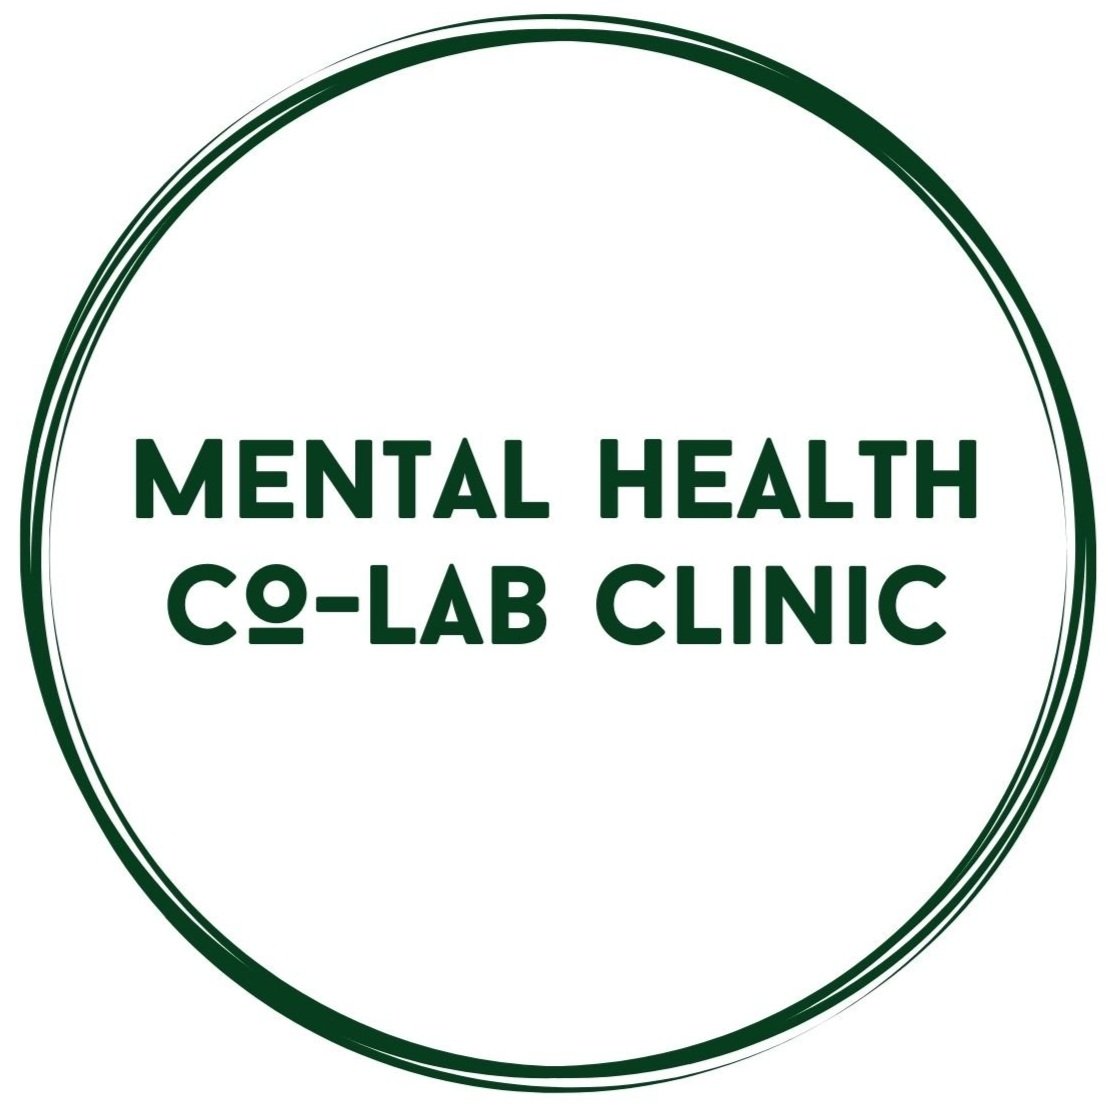 Mental Health Co-Lab Clinic